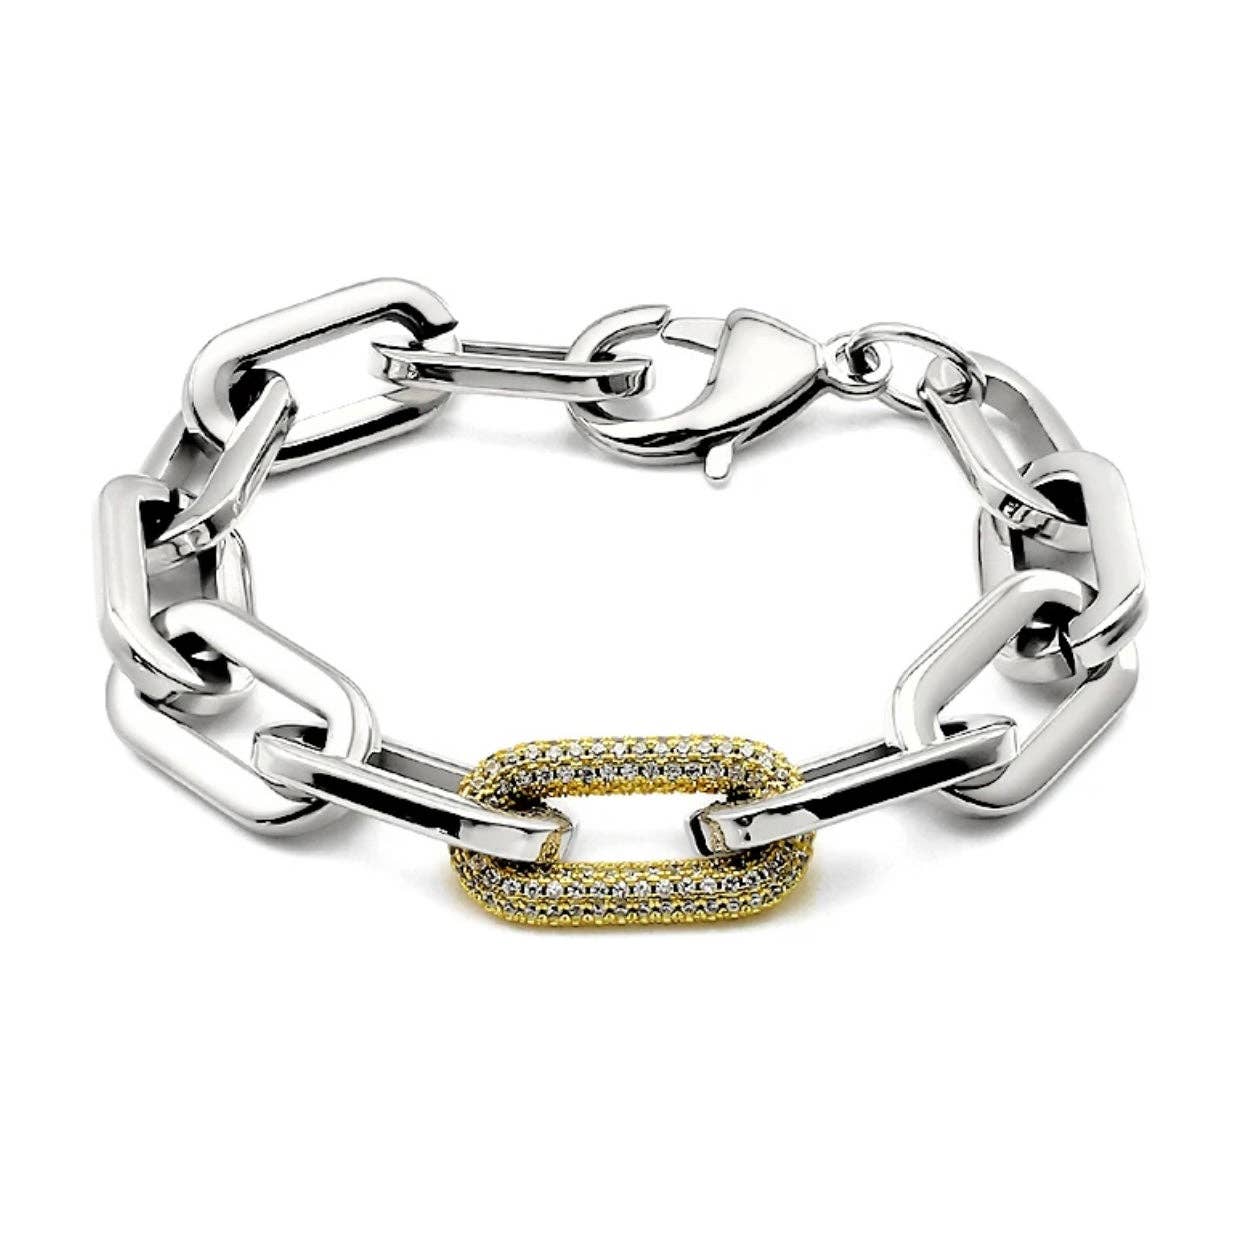 Sahira Jewelry Design - Jenna Pave Bracelet - Silver